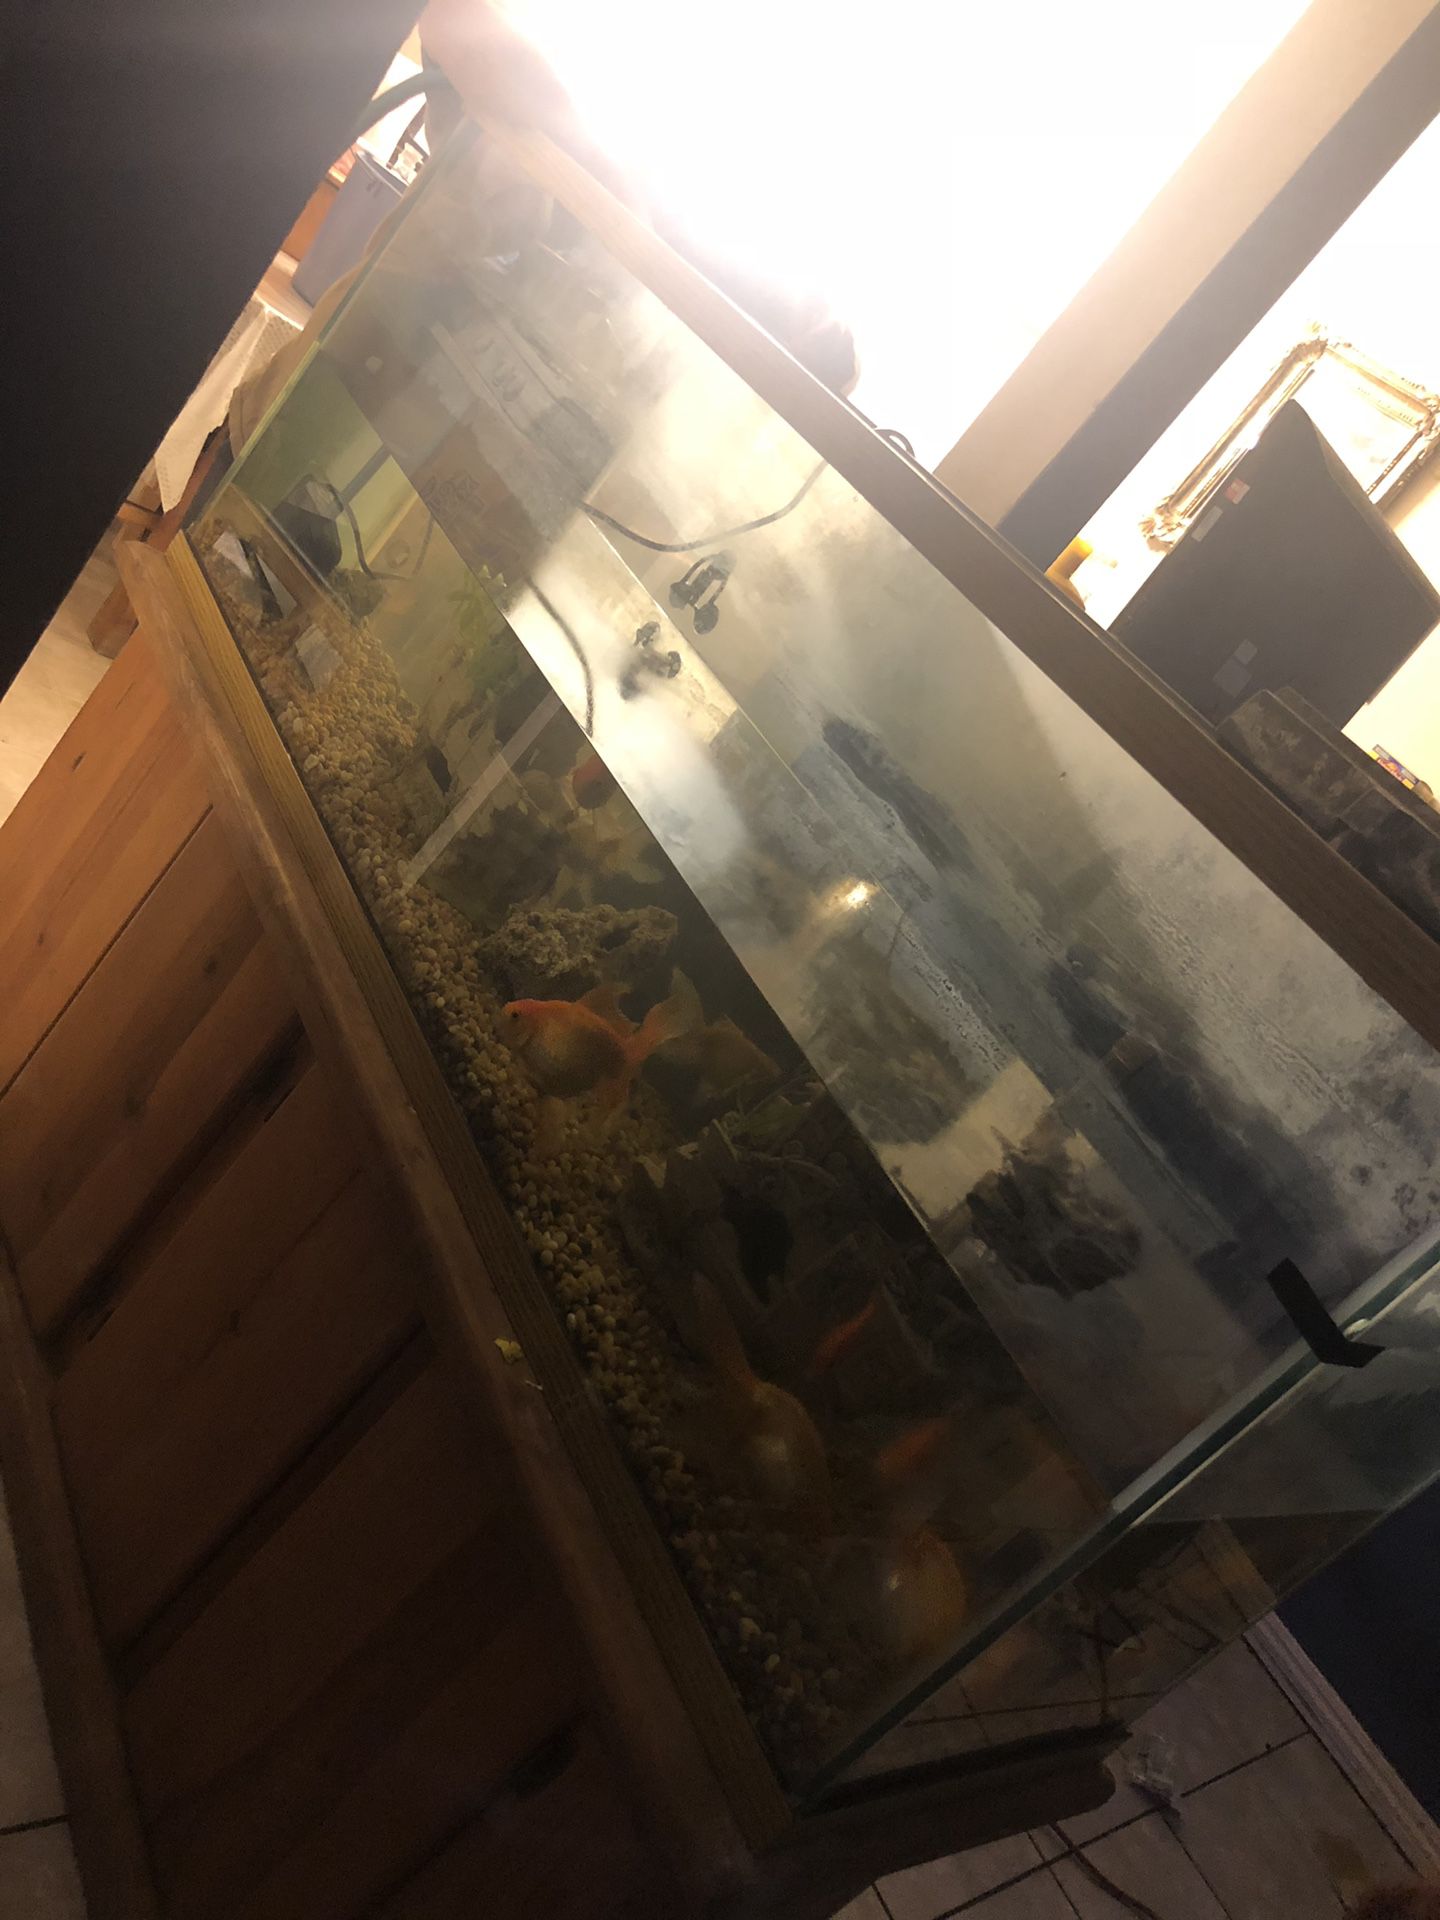 Fish tank